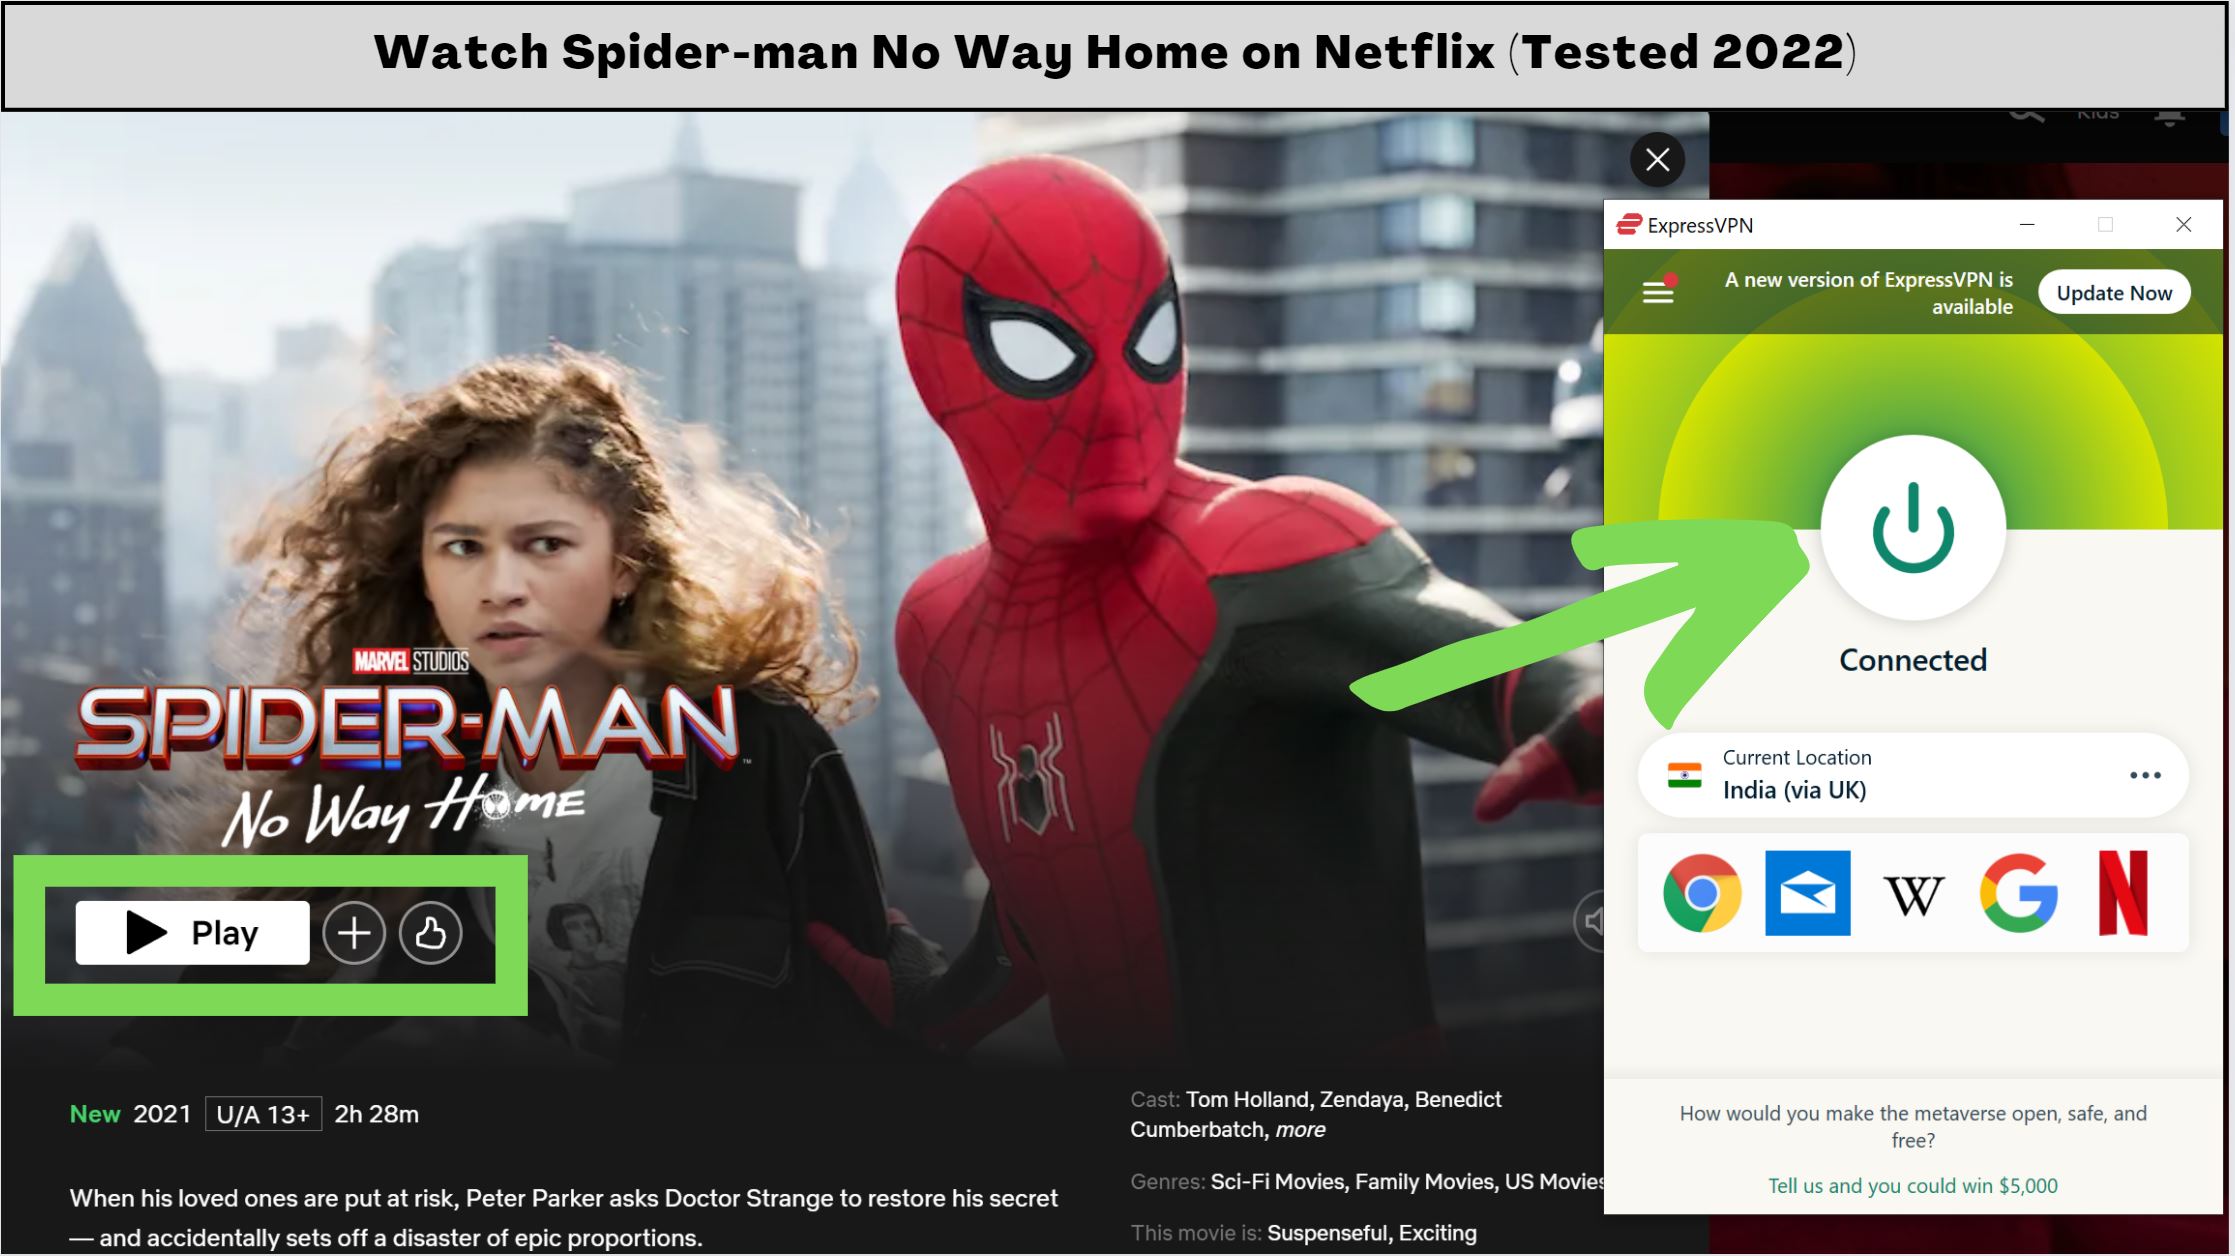 Where to watch Spider-Man No Way Home? | Watch Spider-Man No Way Home on Netflix (Updated 2022)